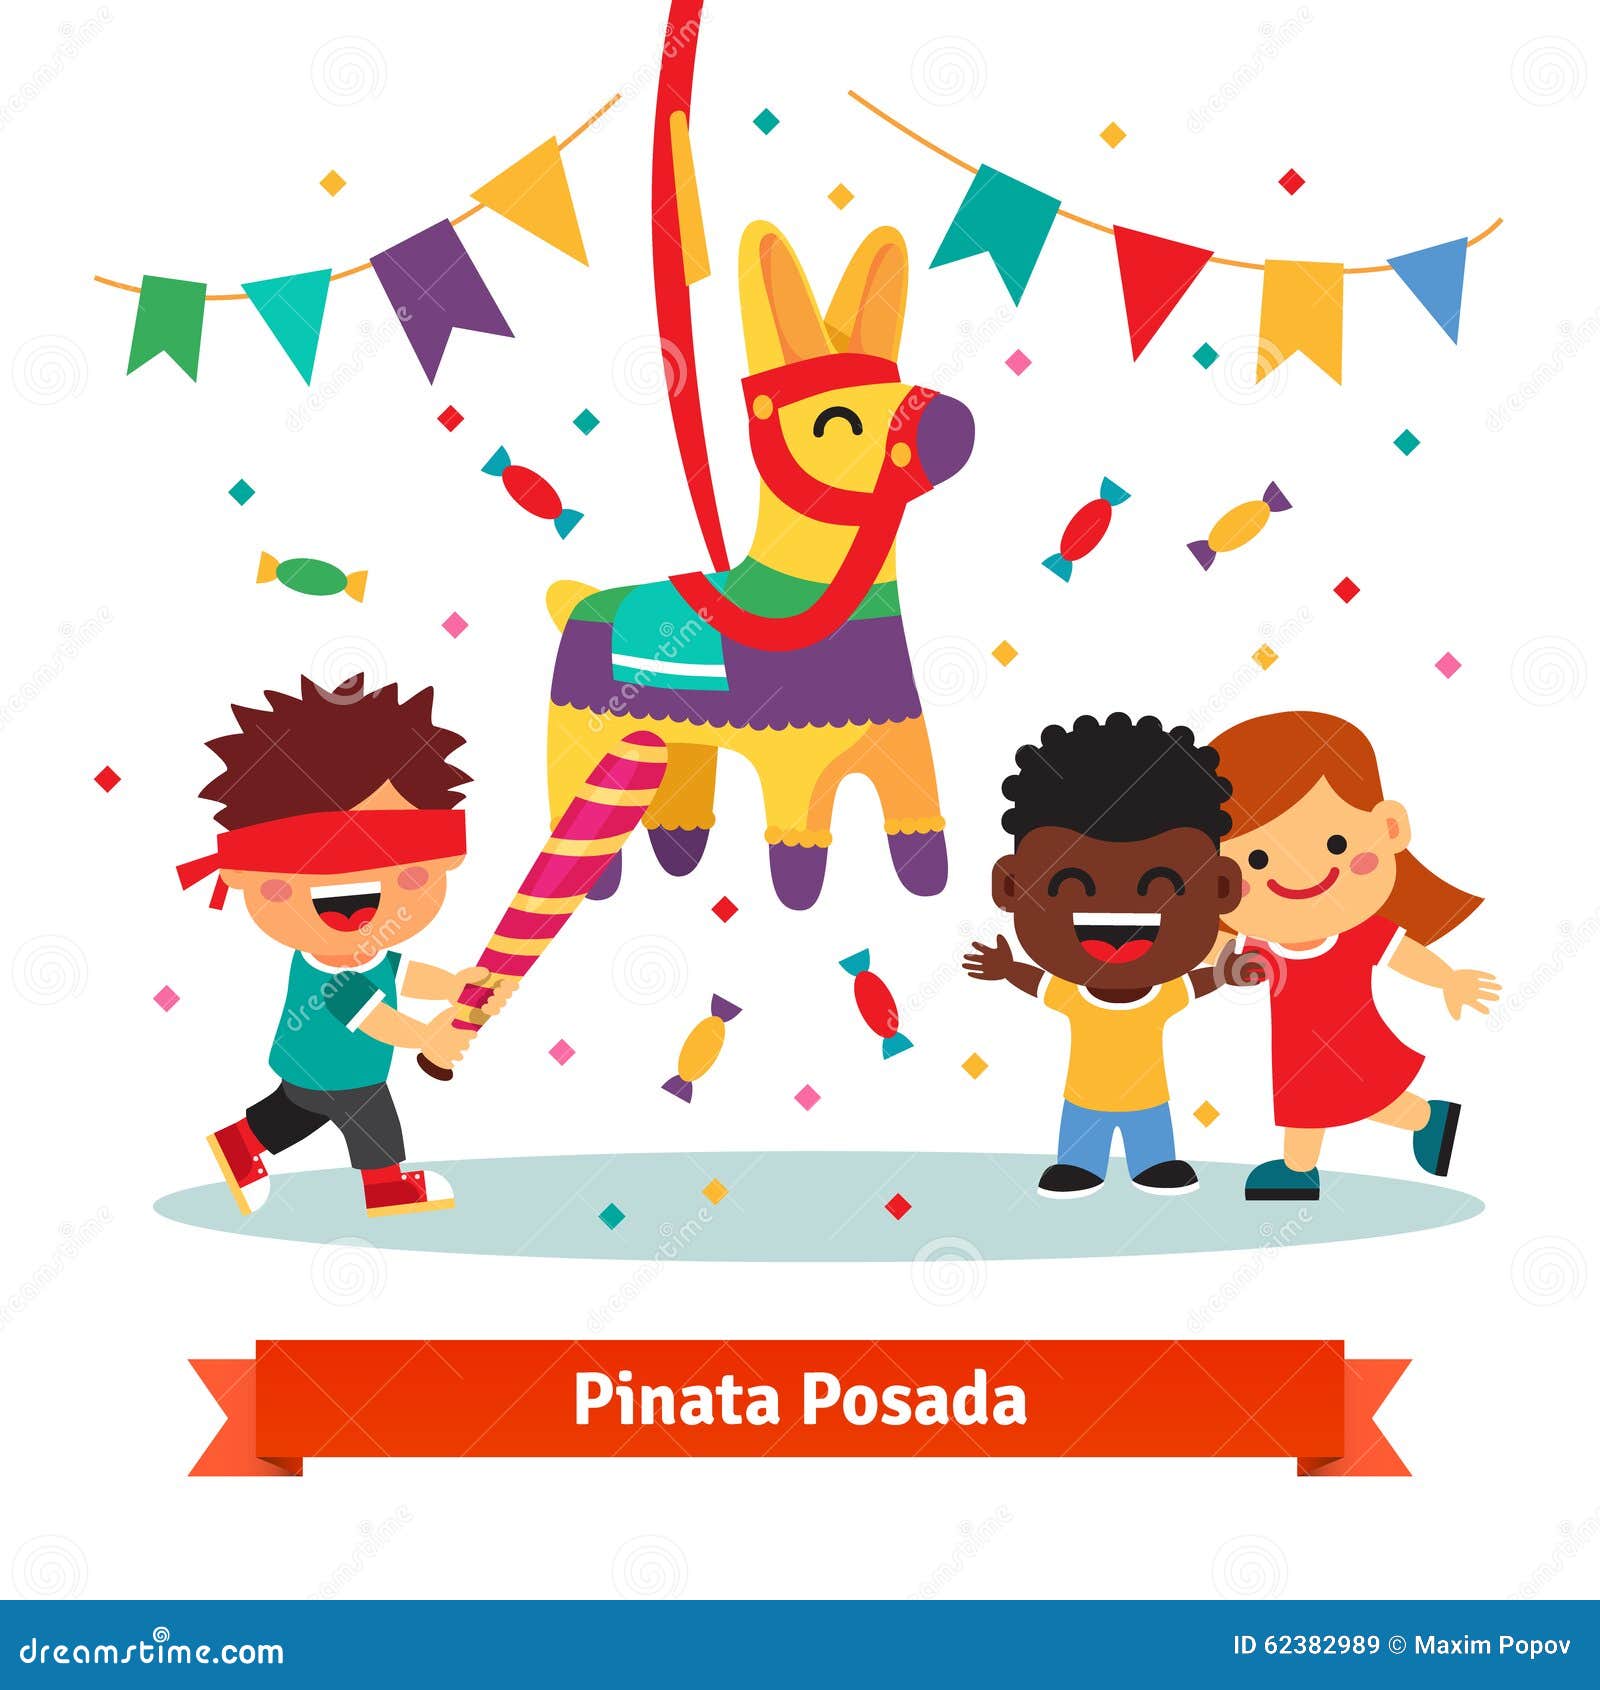 children celebrating posada by breaking pinata